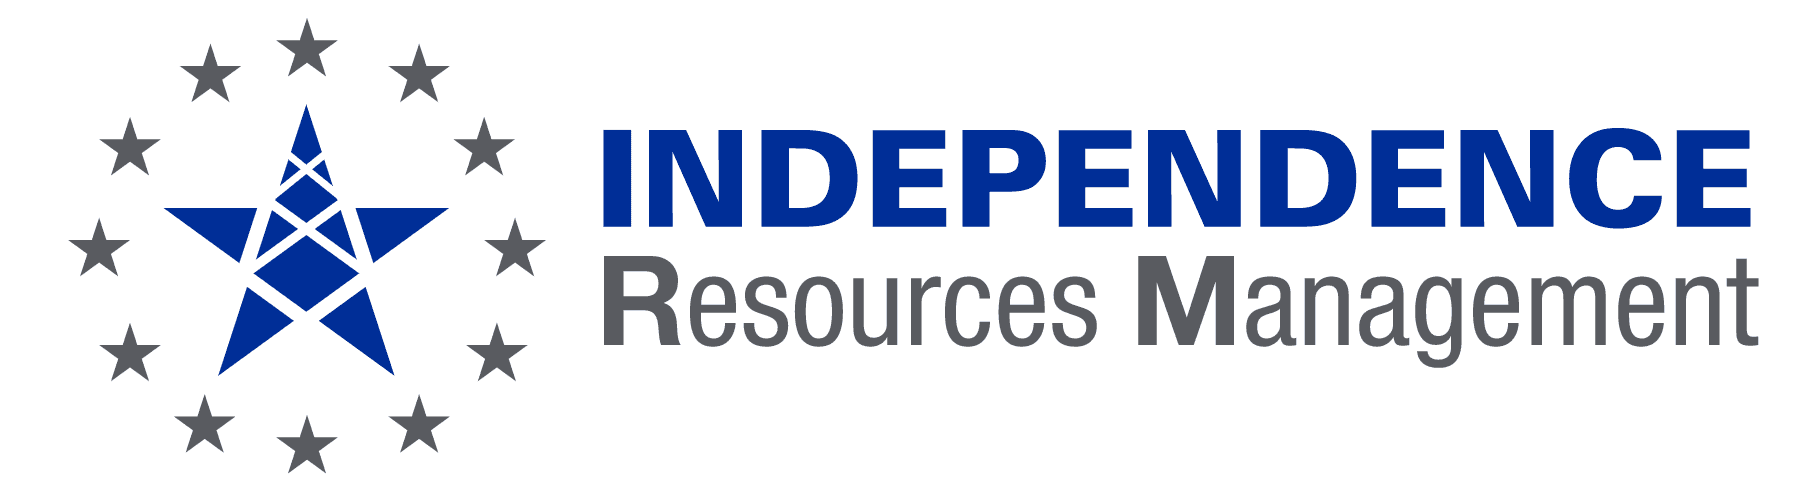 INDEPENDENCE RESOURCES MANAGEMENT LLC